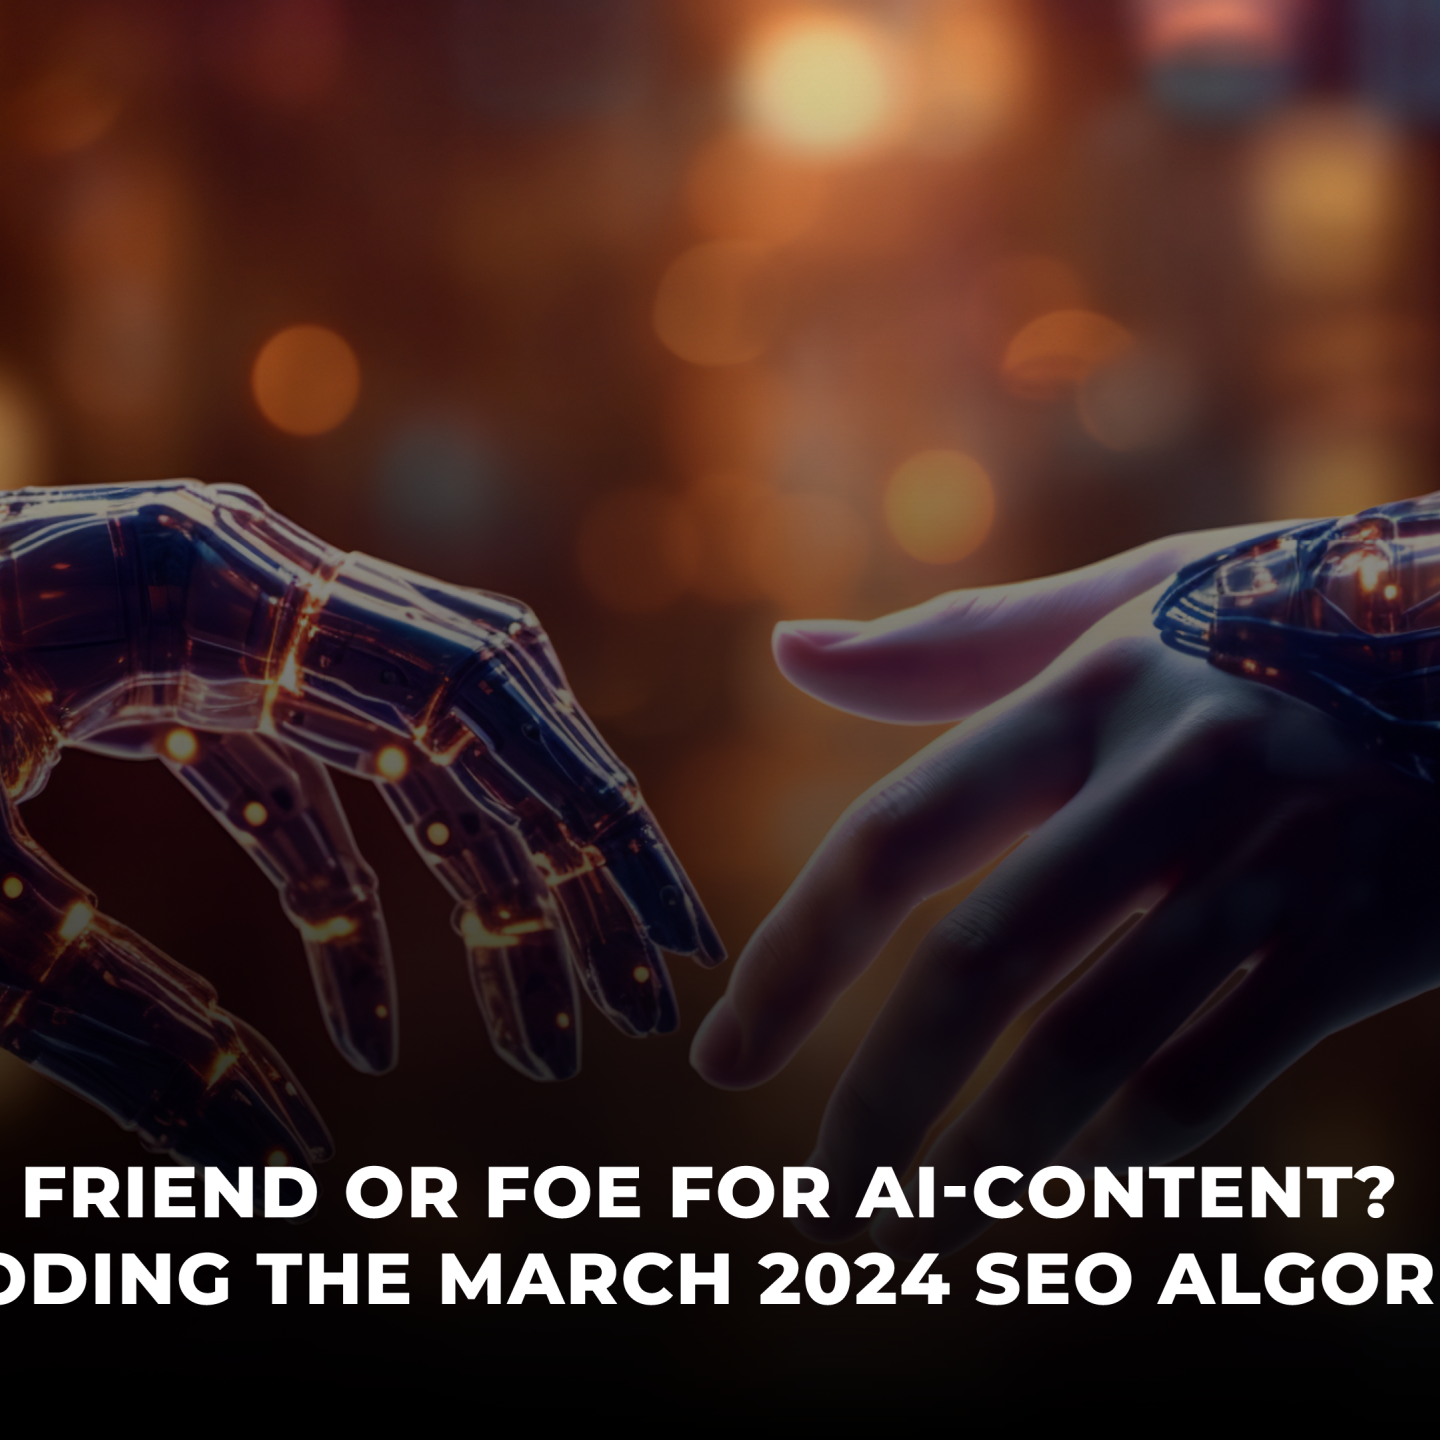 Friend or Foe for AI-Content Decoding the March 2024 SEO Algorithm